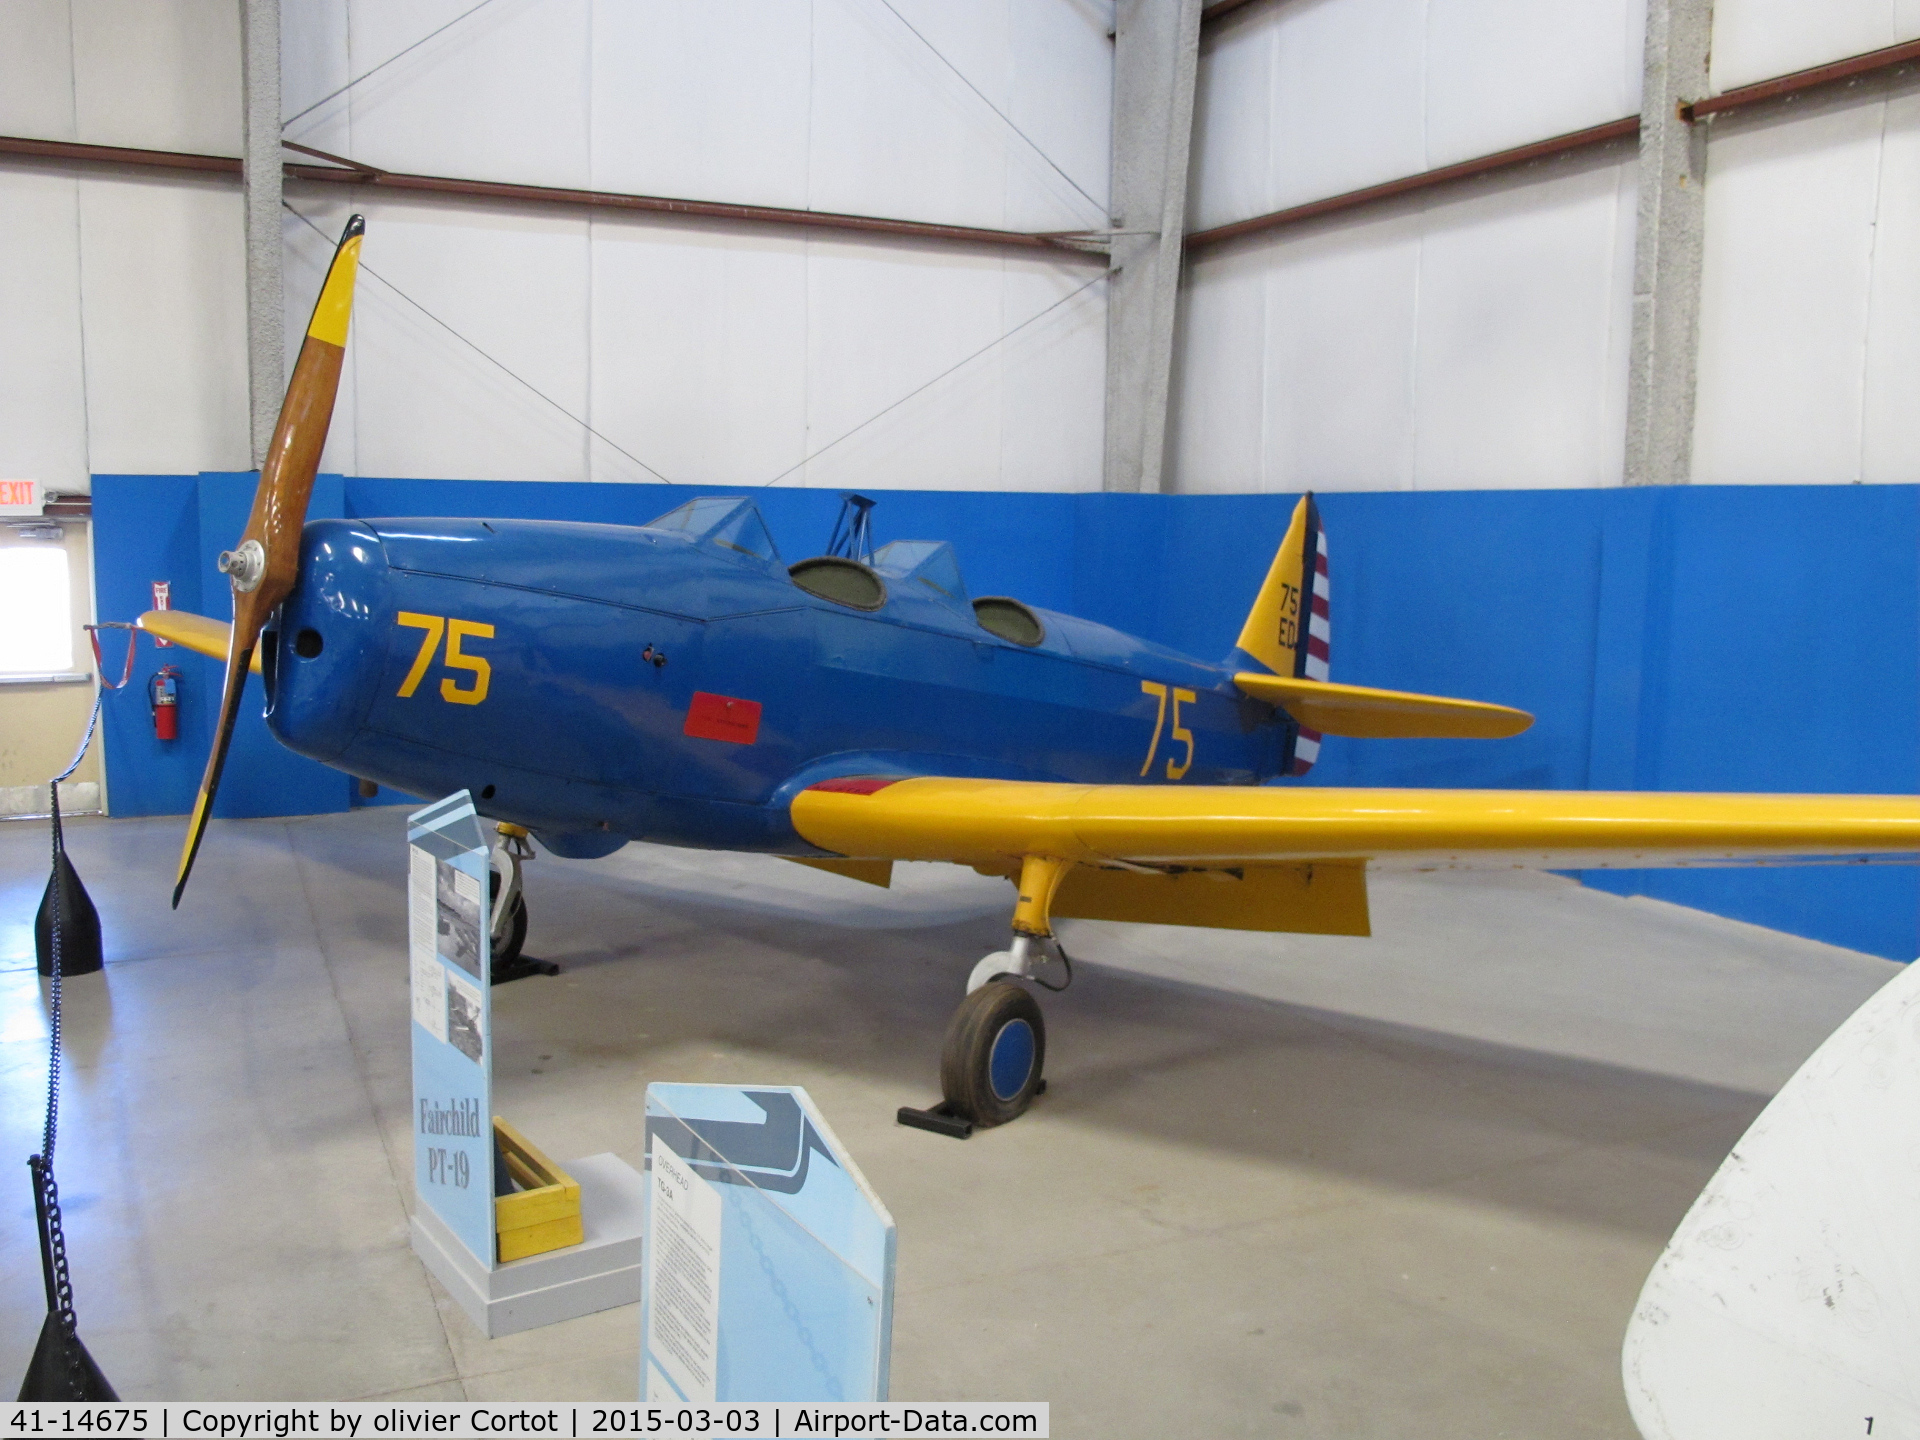 41-14675, Fairchild PT-19A C/N Not found 41-14675, Pima museum